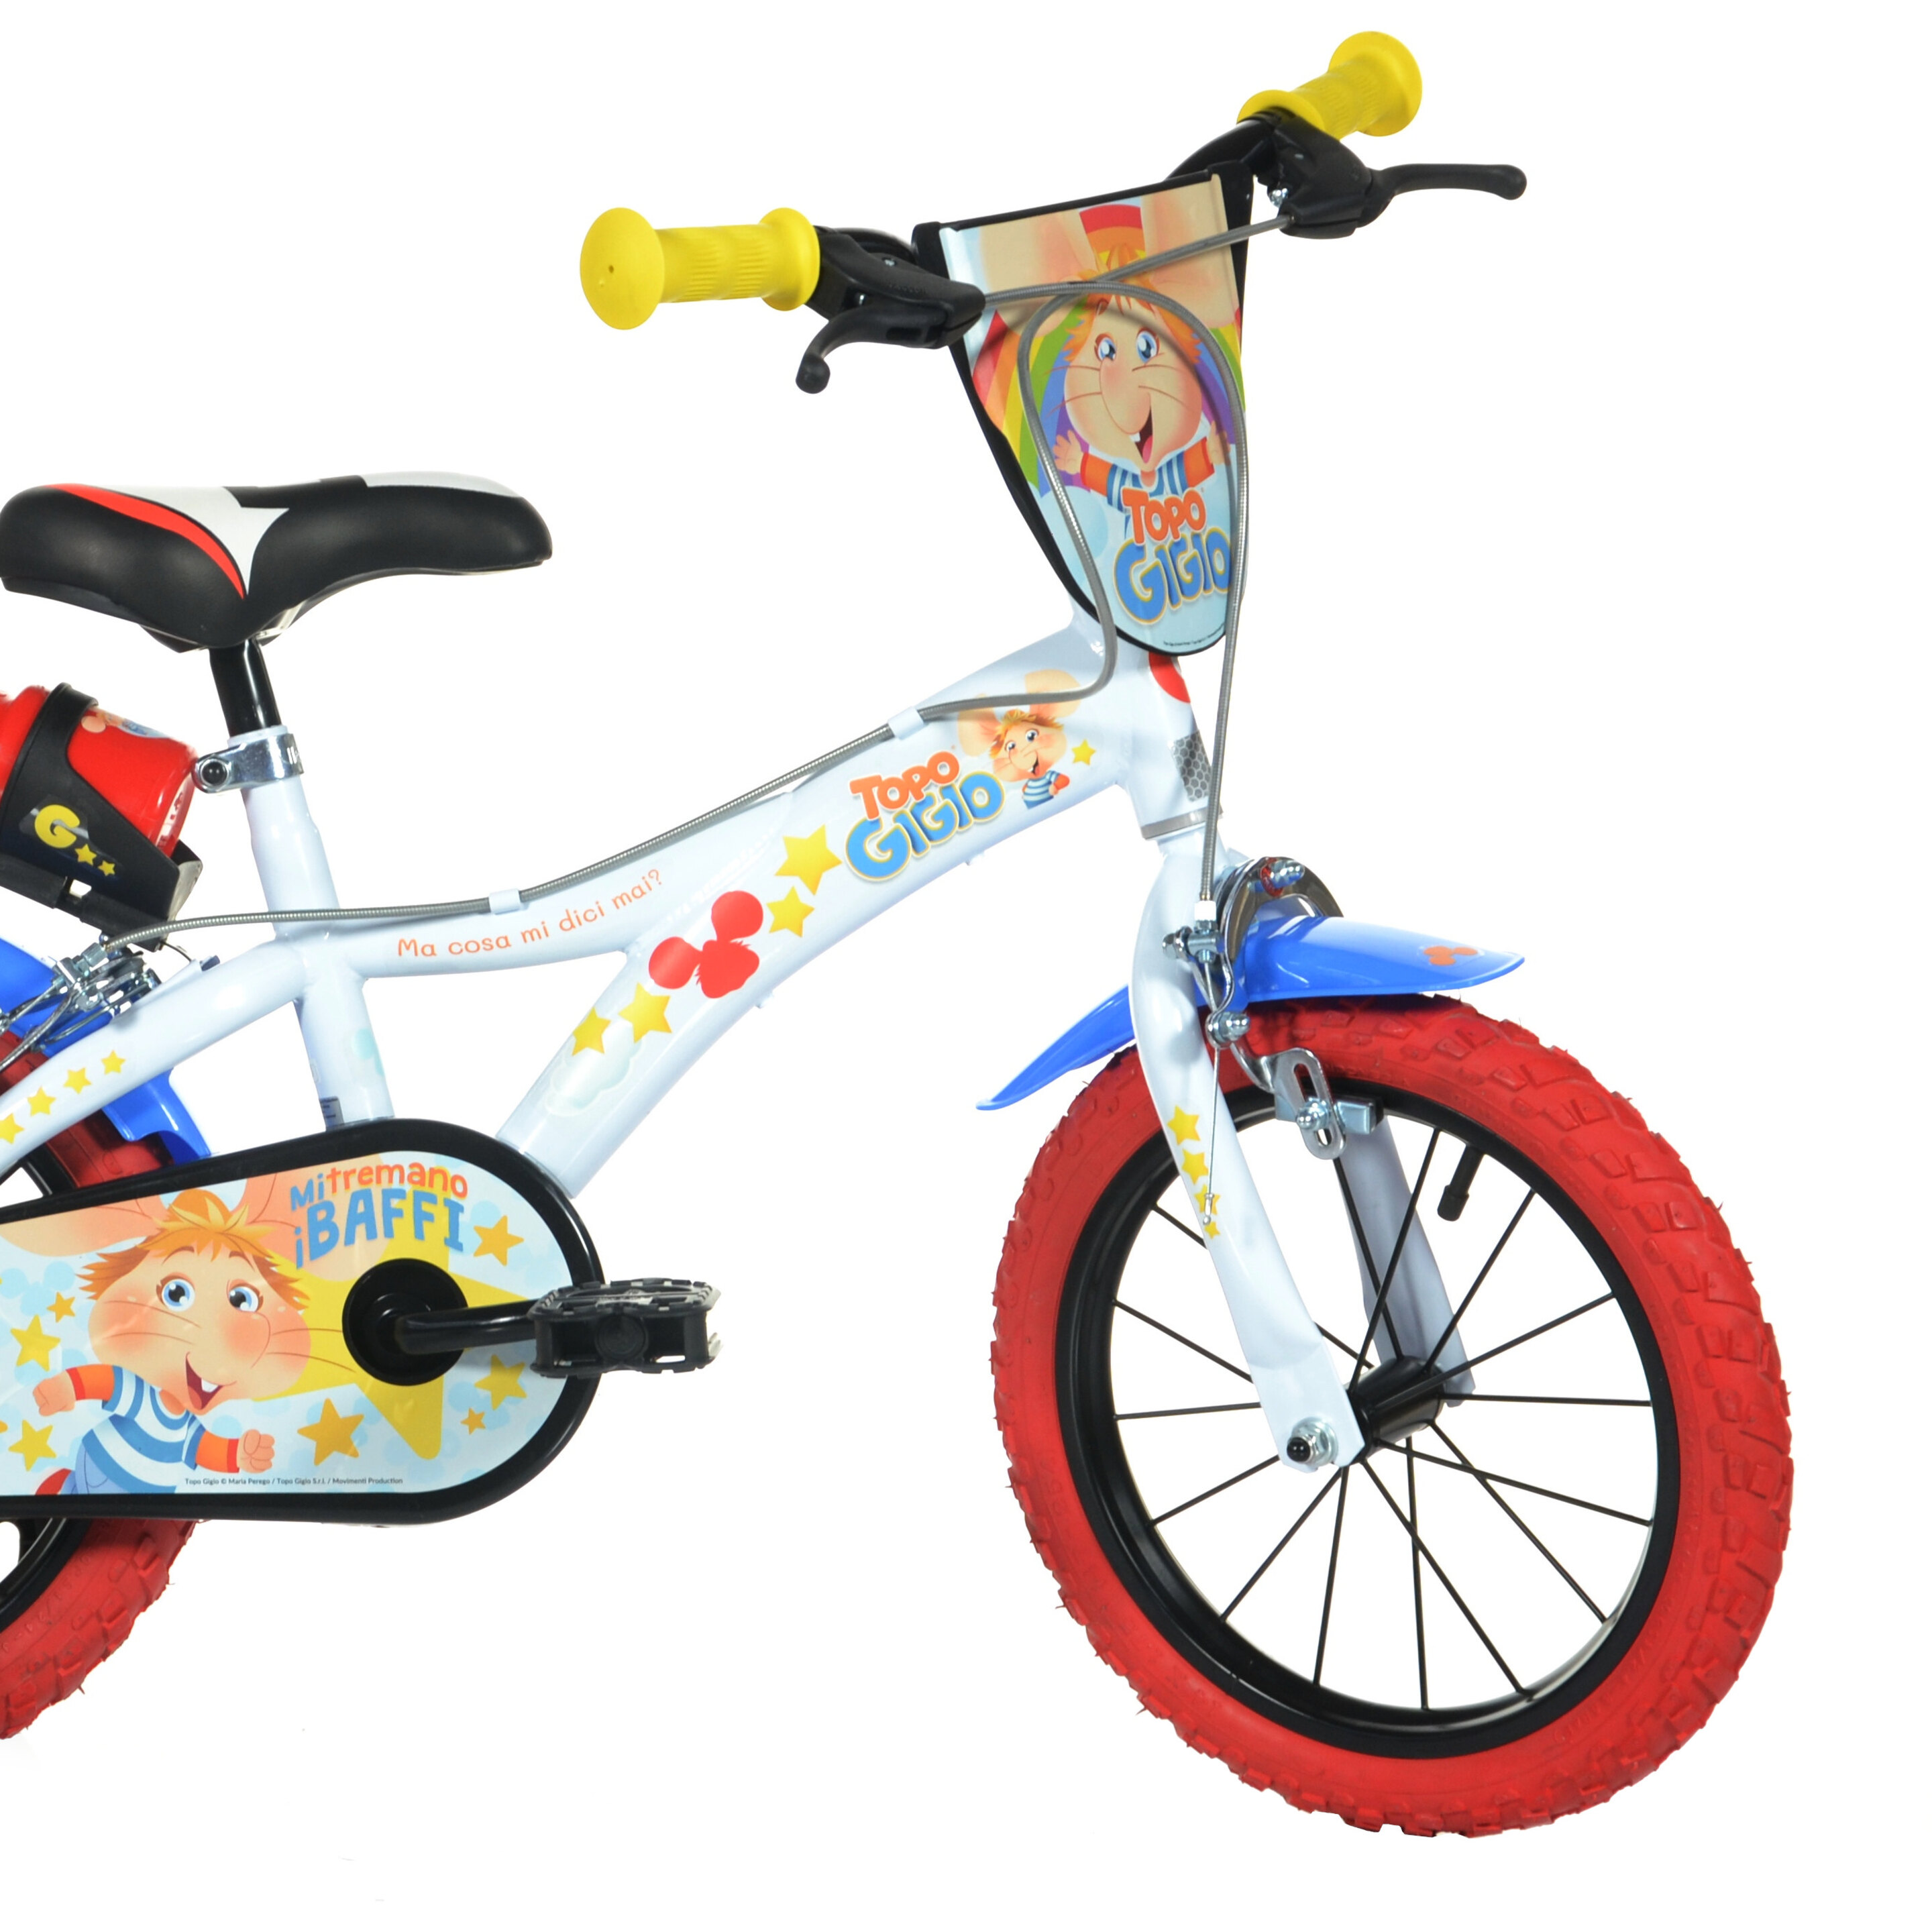 Bicicleta Infantil Topo Gigio 16 Pulgadas